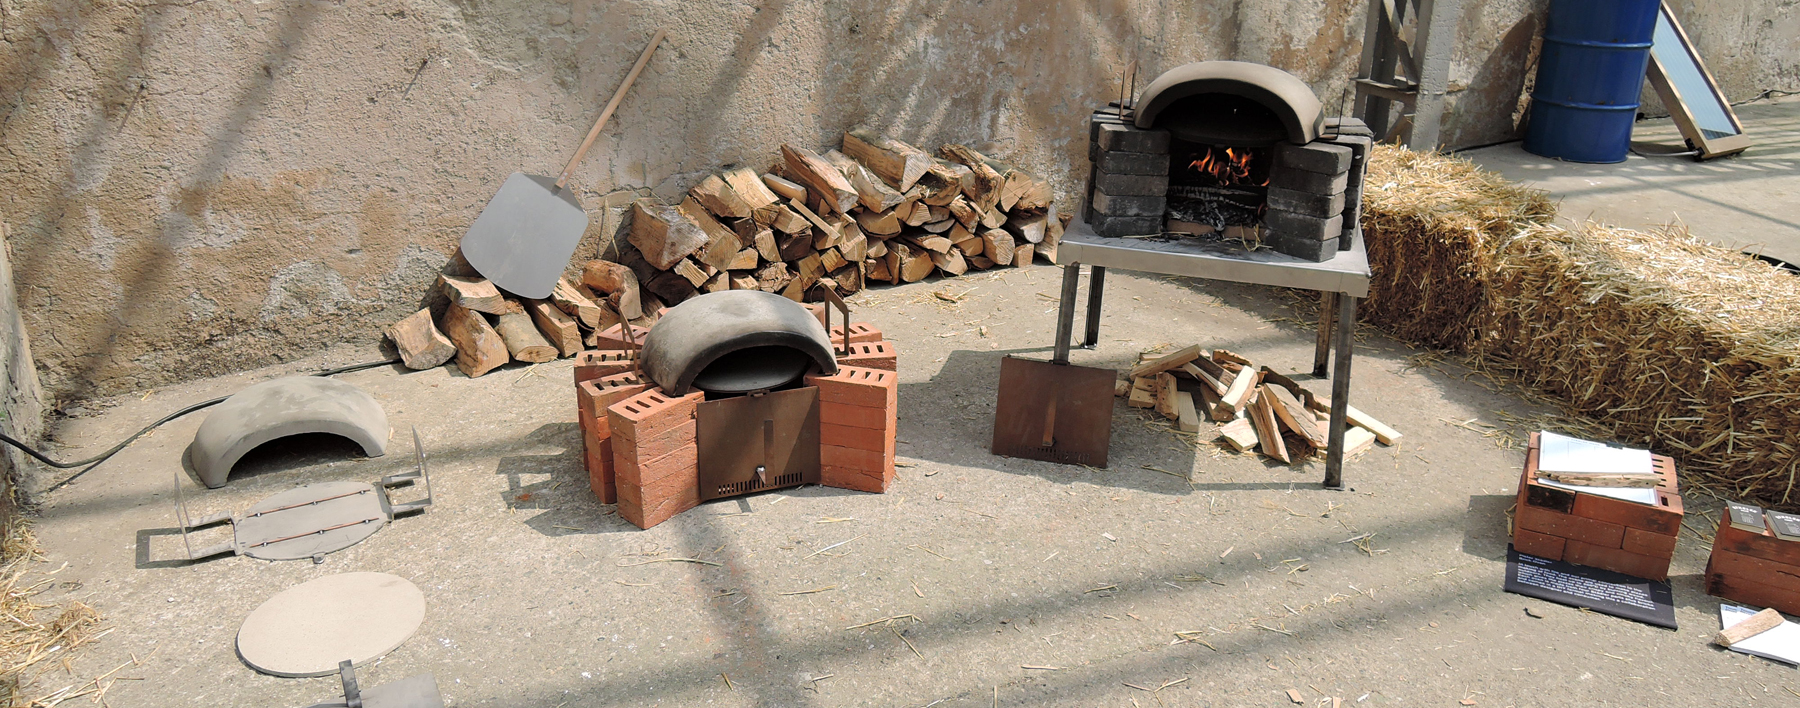 pieter städler's compact DIY brick oven at milan design week